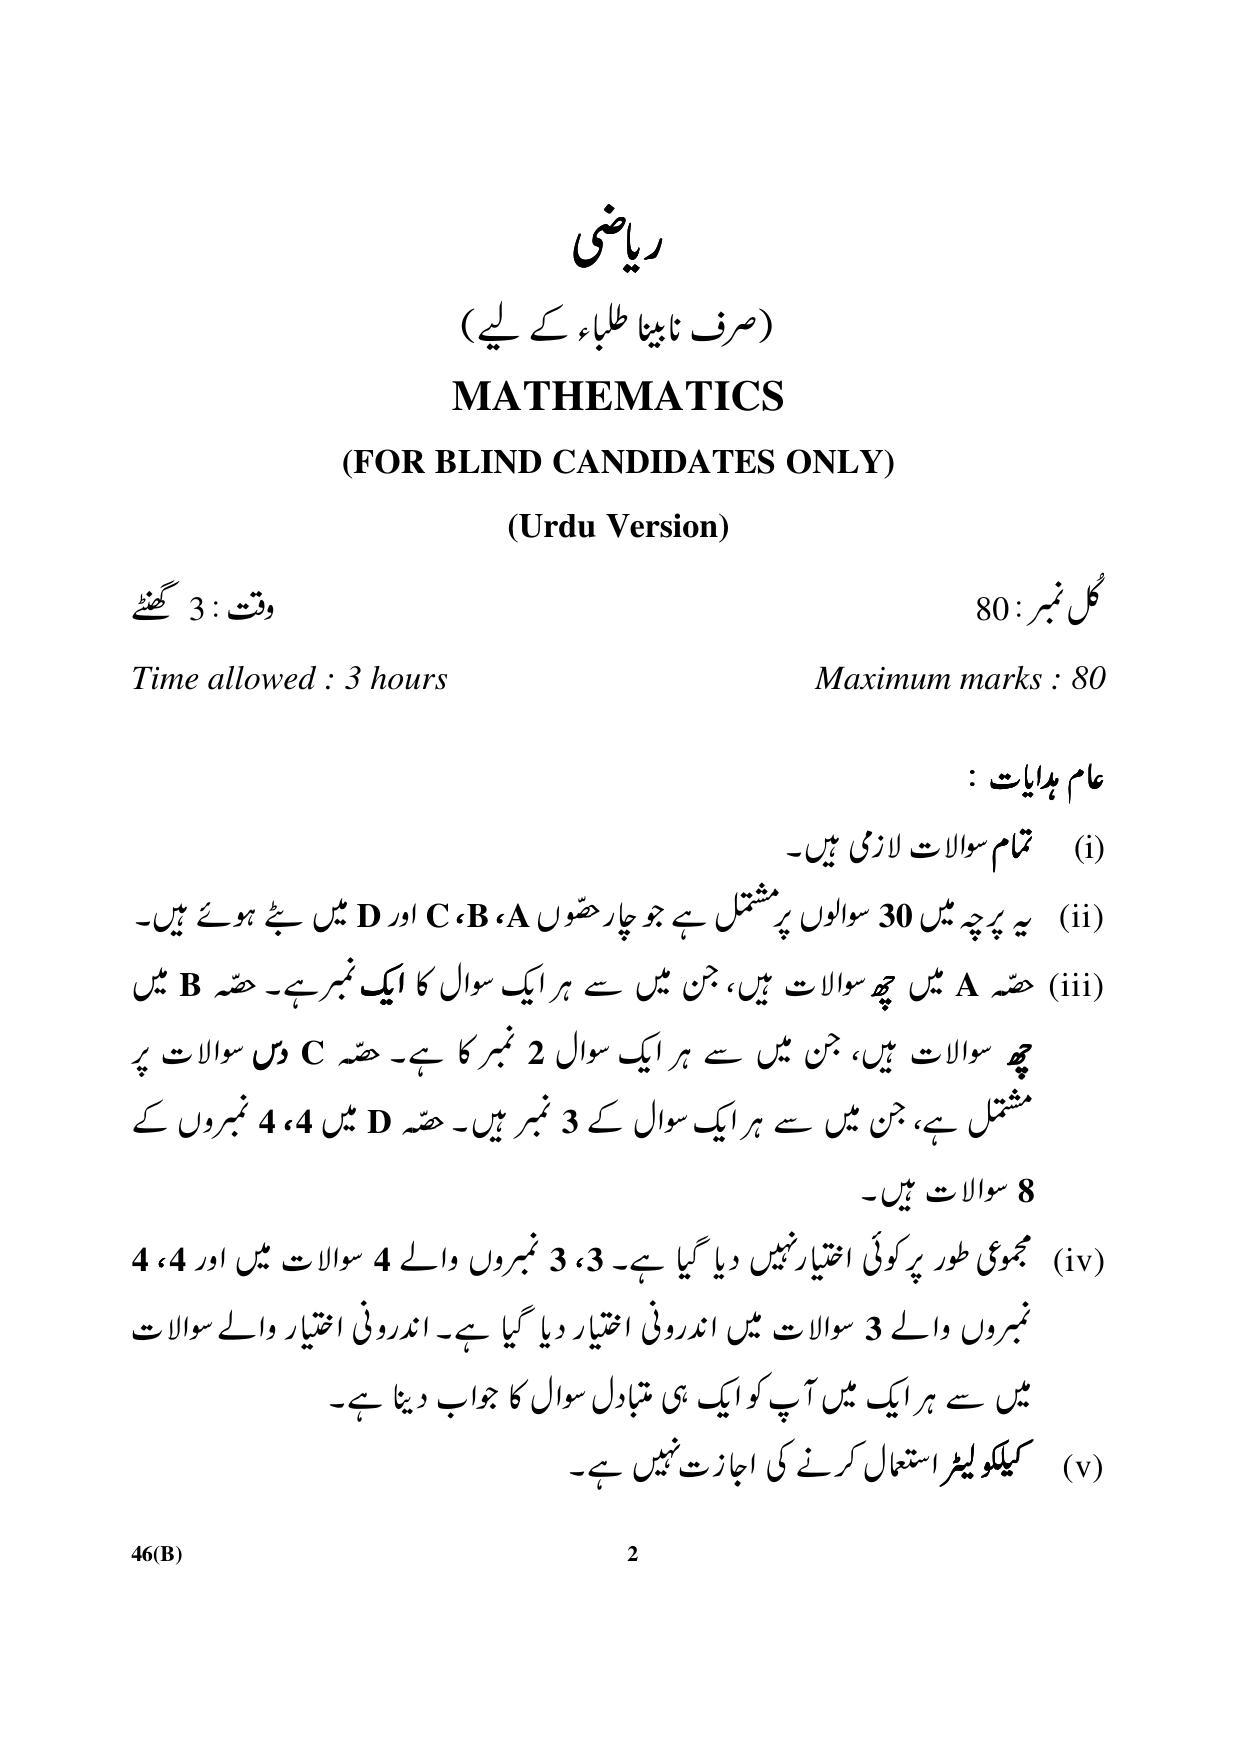 CBSE Class 10 46(B) Maths (For Blind) Urdu Version 2018 Question Paper - Page 2